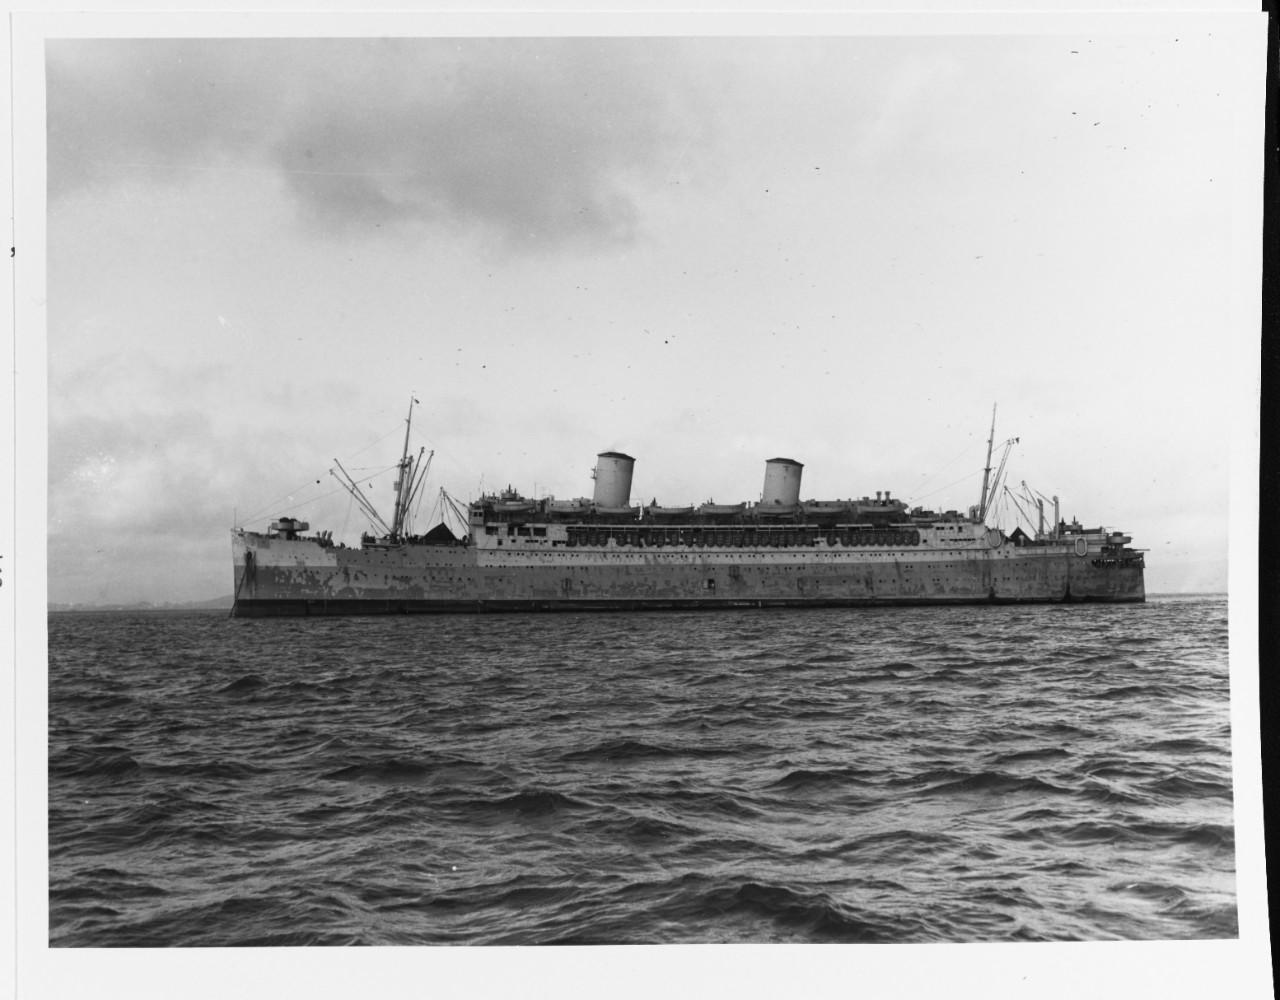 S.S. MARIPOSA (American Merchant Passenger Ship 1931-1974, under this name 1931-1953)